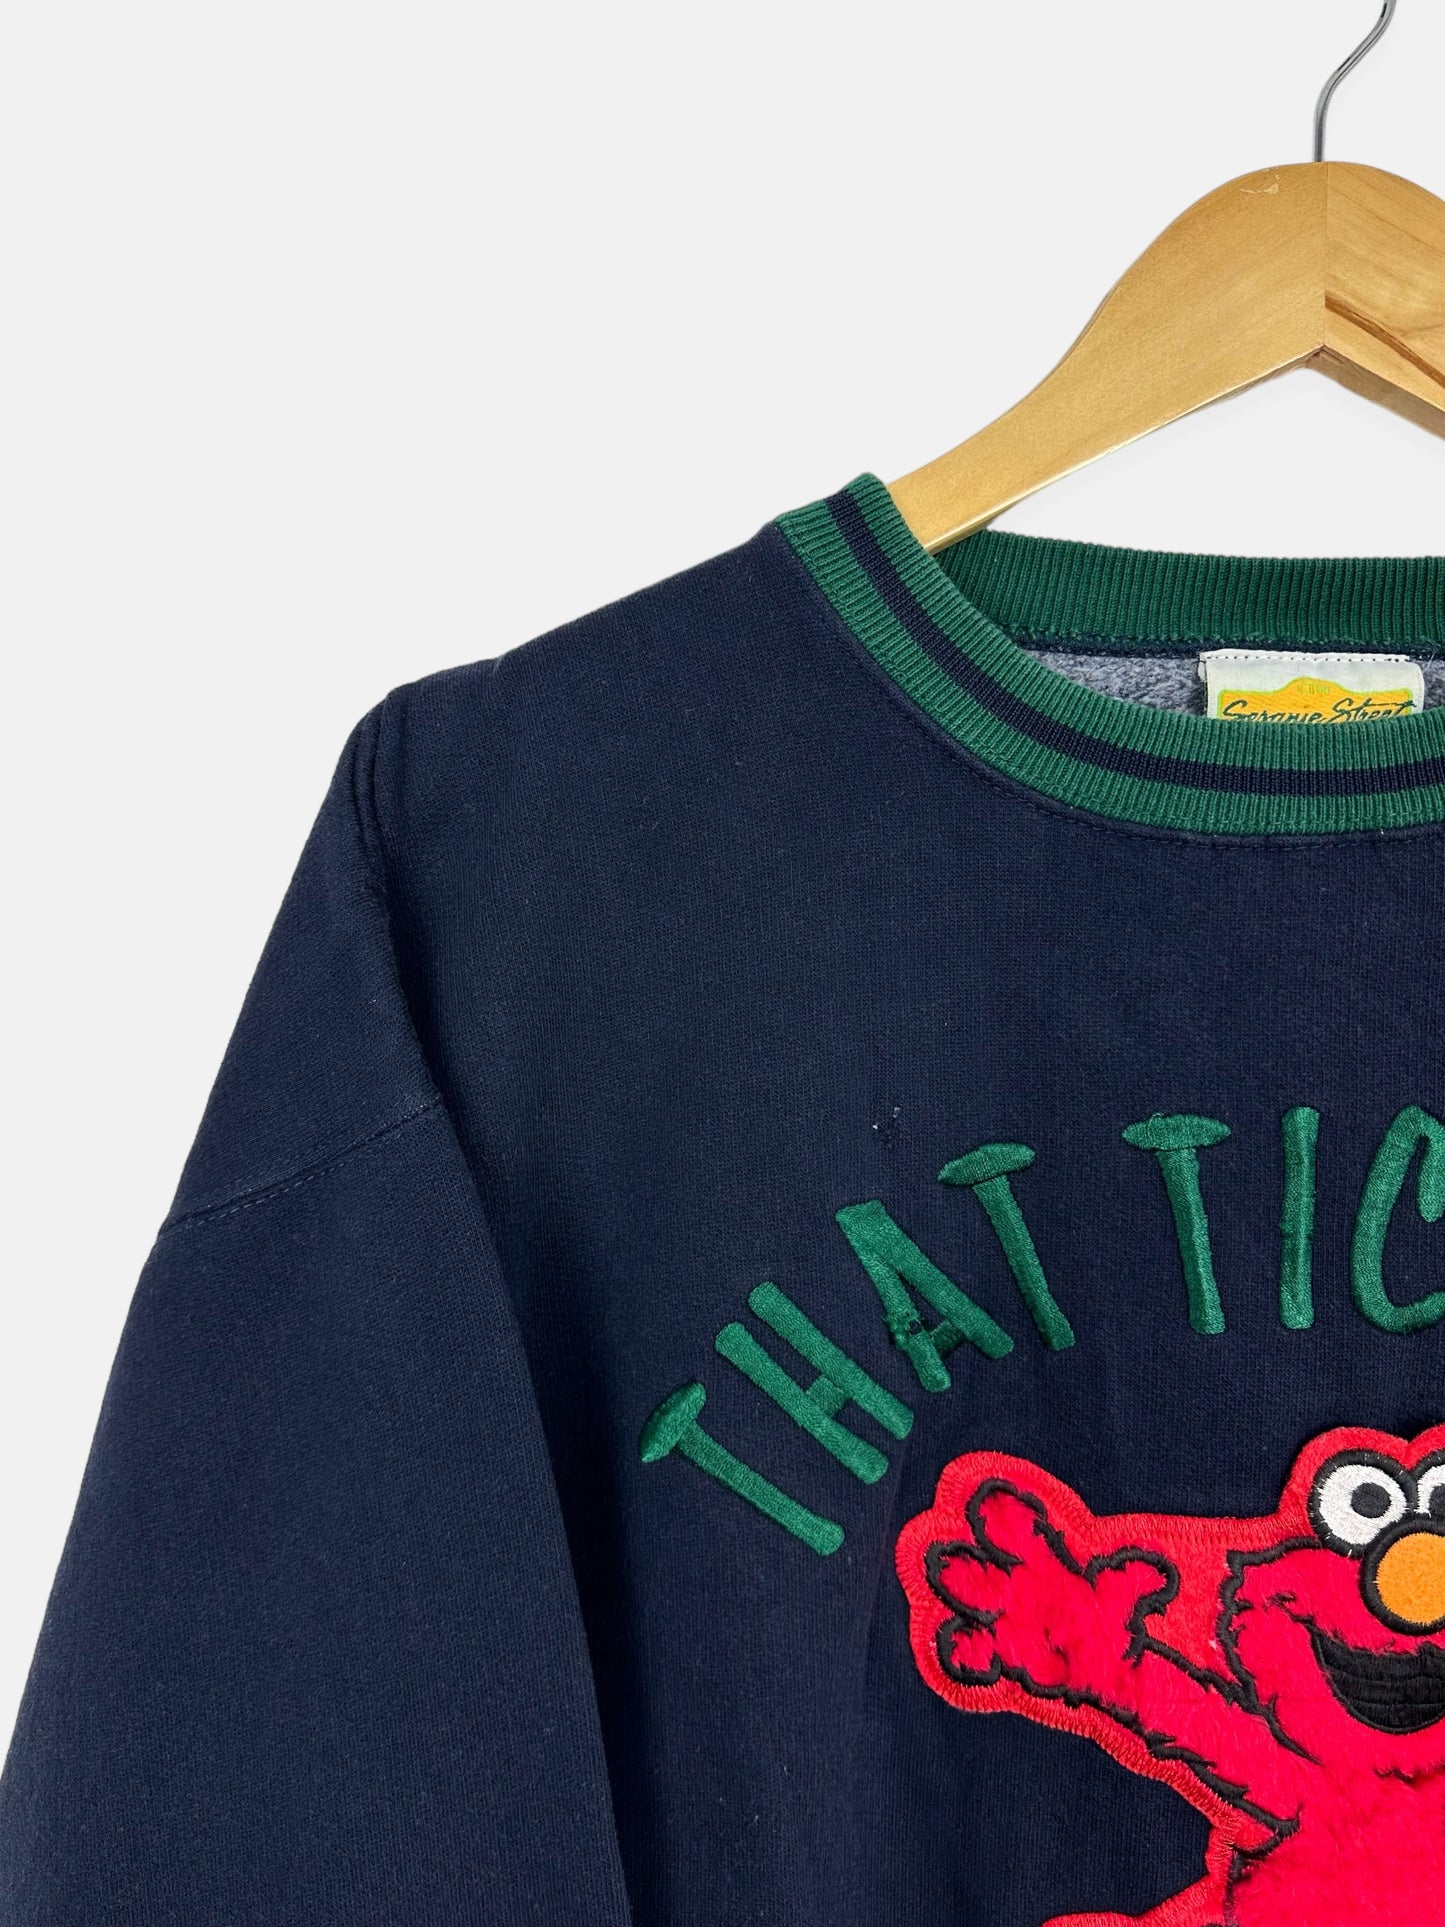 90's That Tickles Elmo Embroidered Vintage Sweatshirt Size M